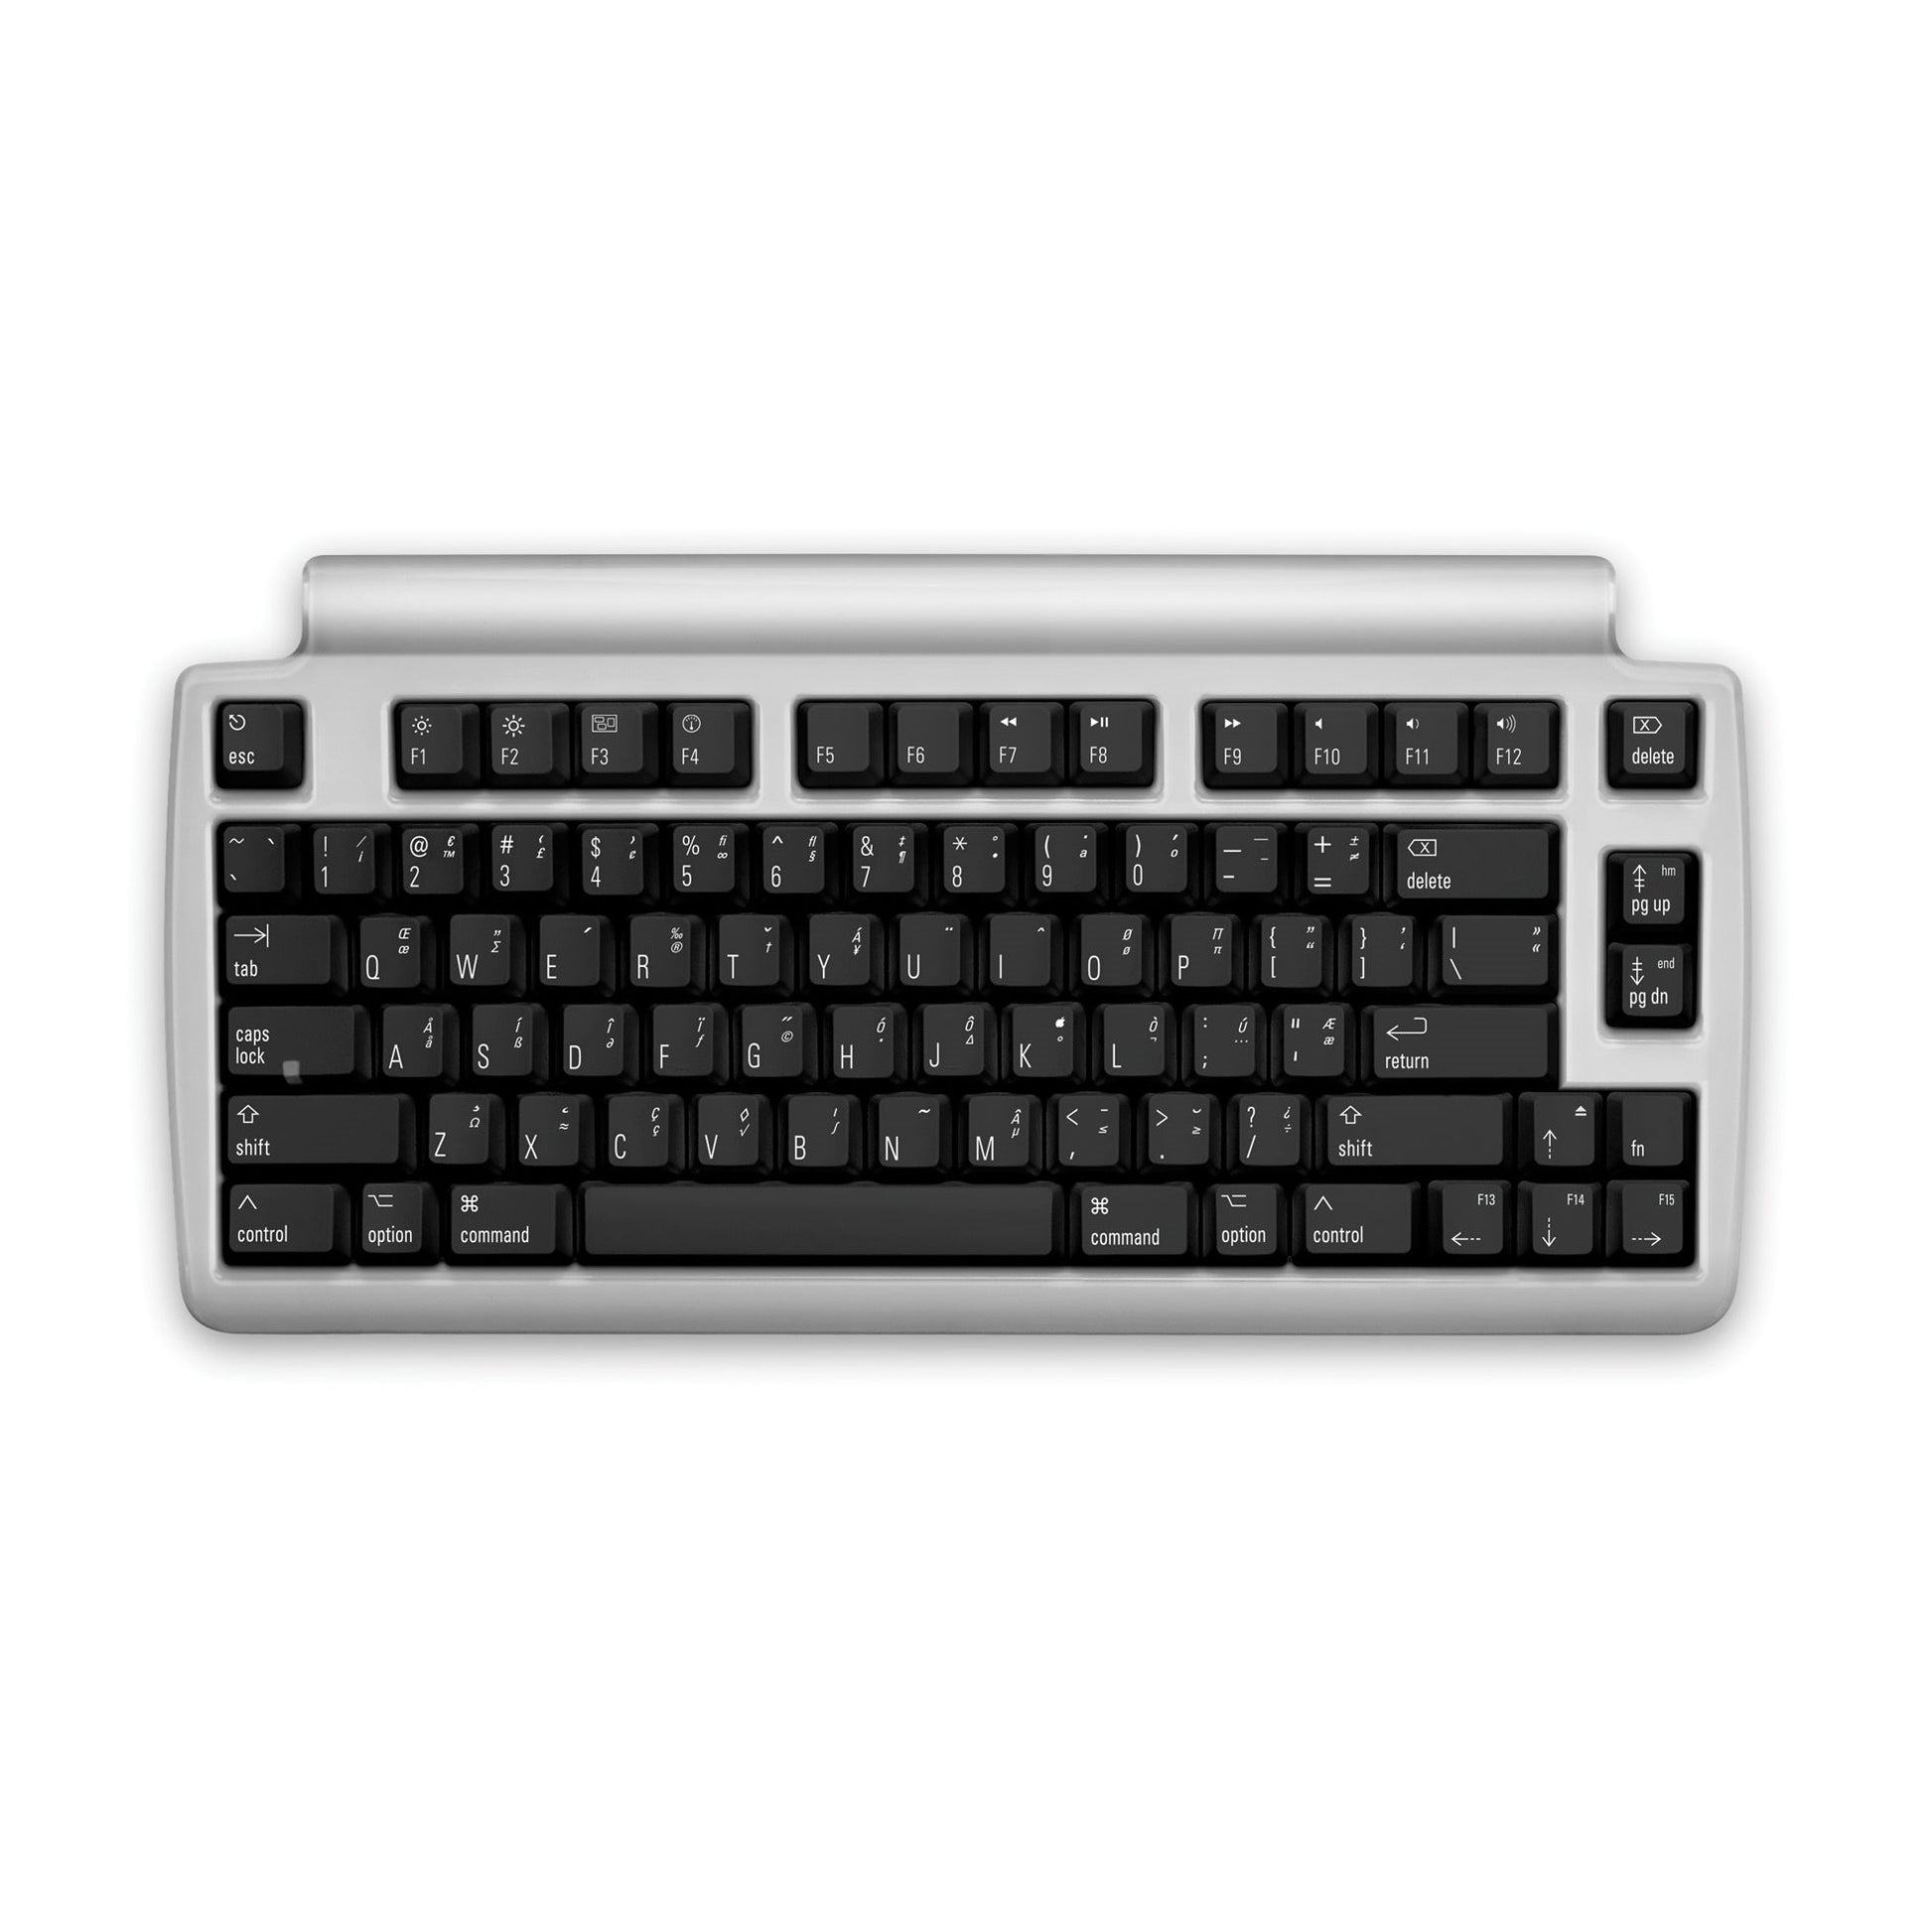 Leven van buitenste Kiezen Laptop Pro Keyboard for Mac – Matias